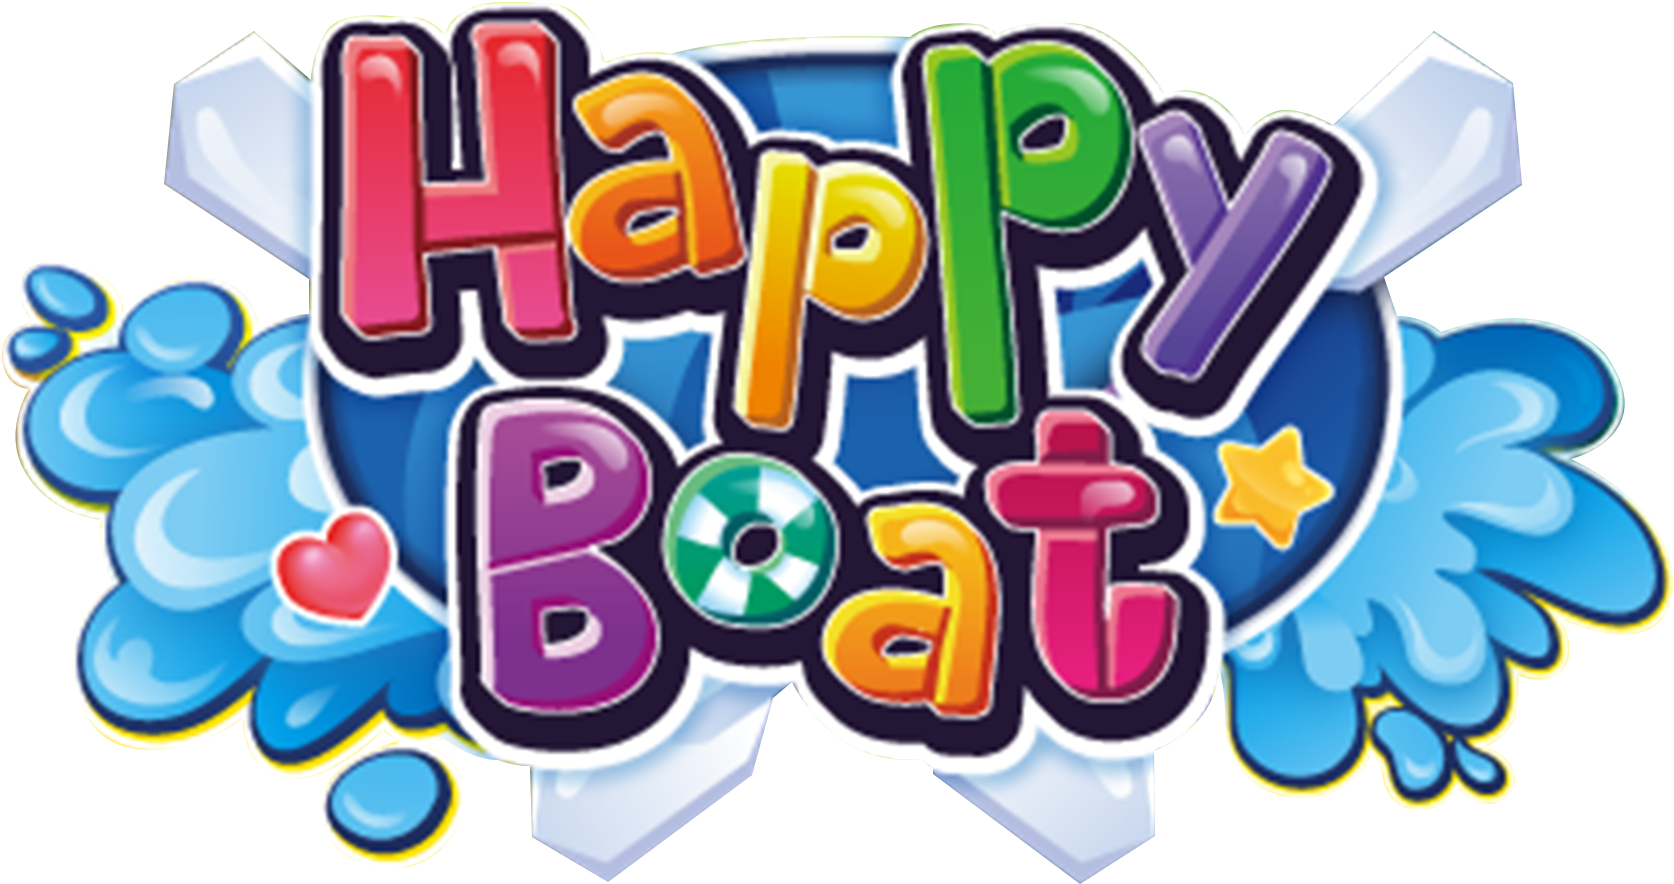 Home » Happy Boat - Home » Happy Boat (1828x1050)